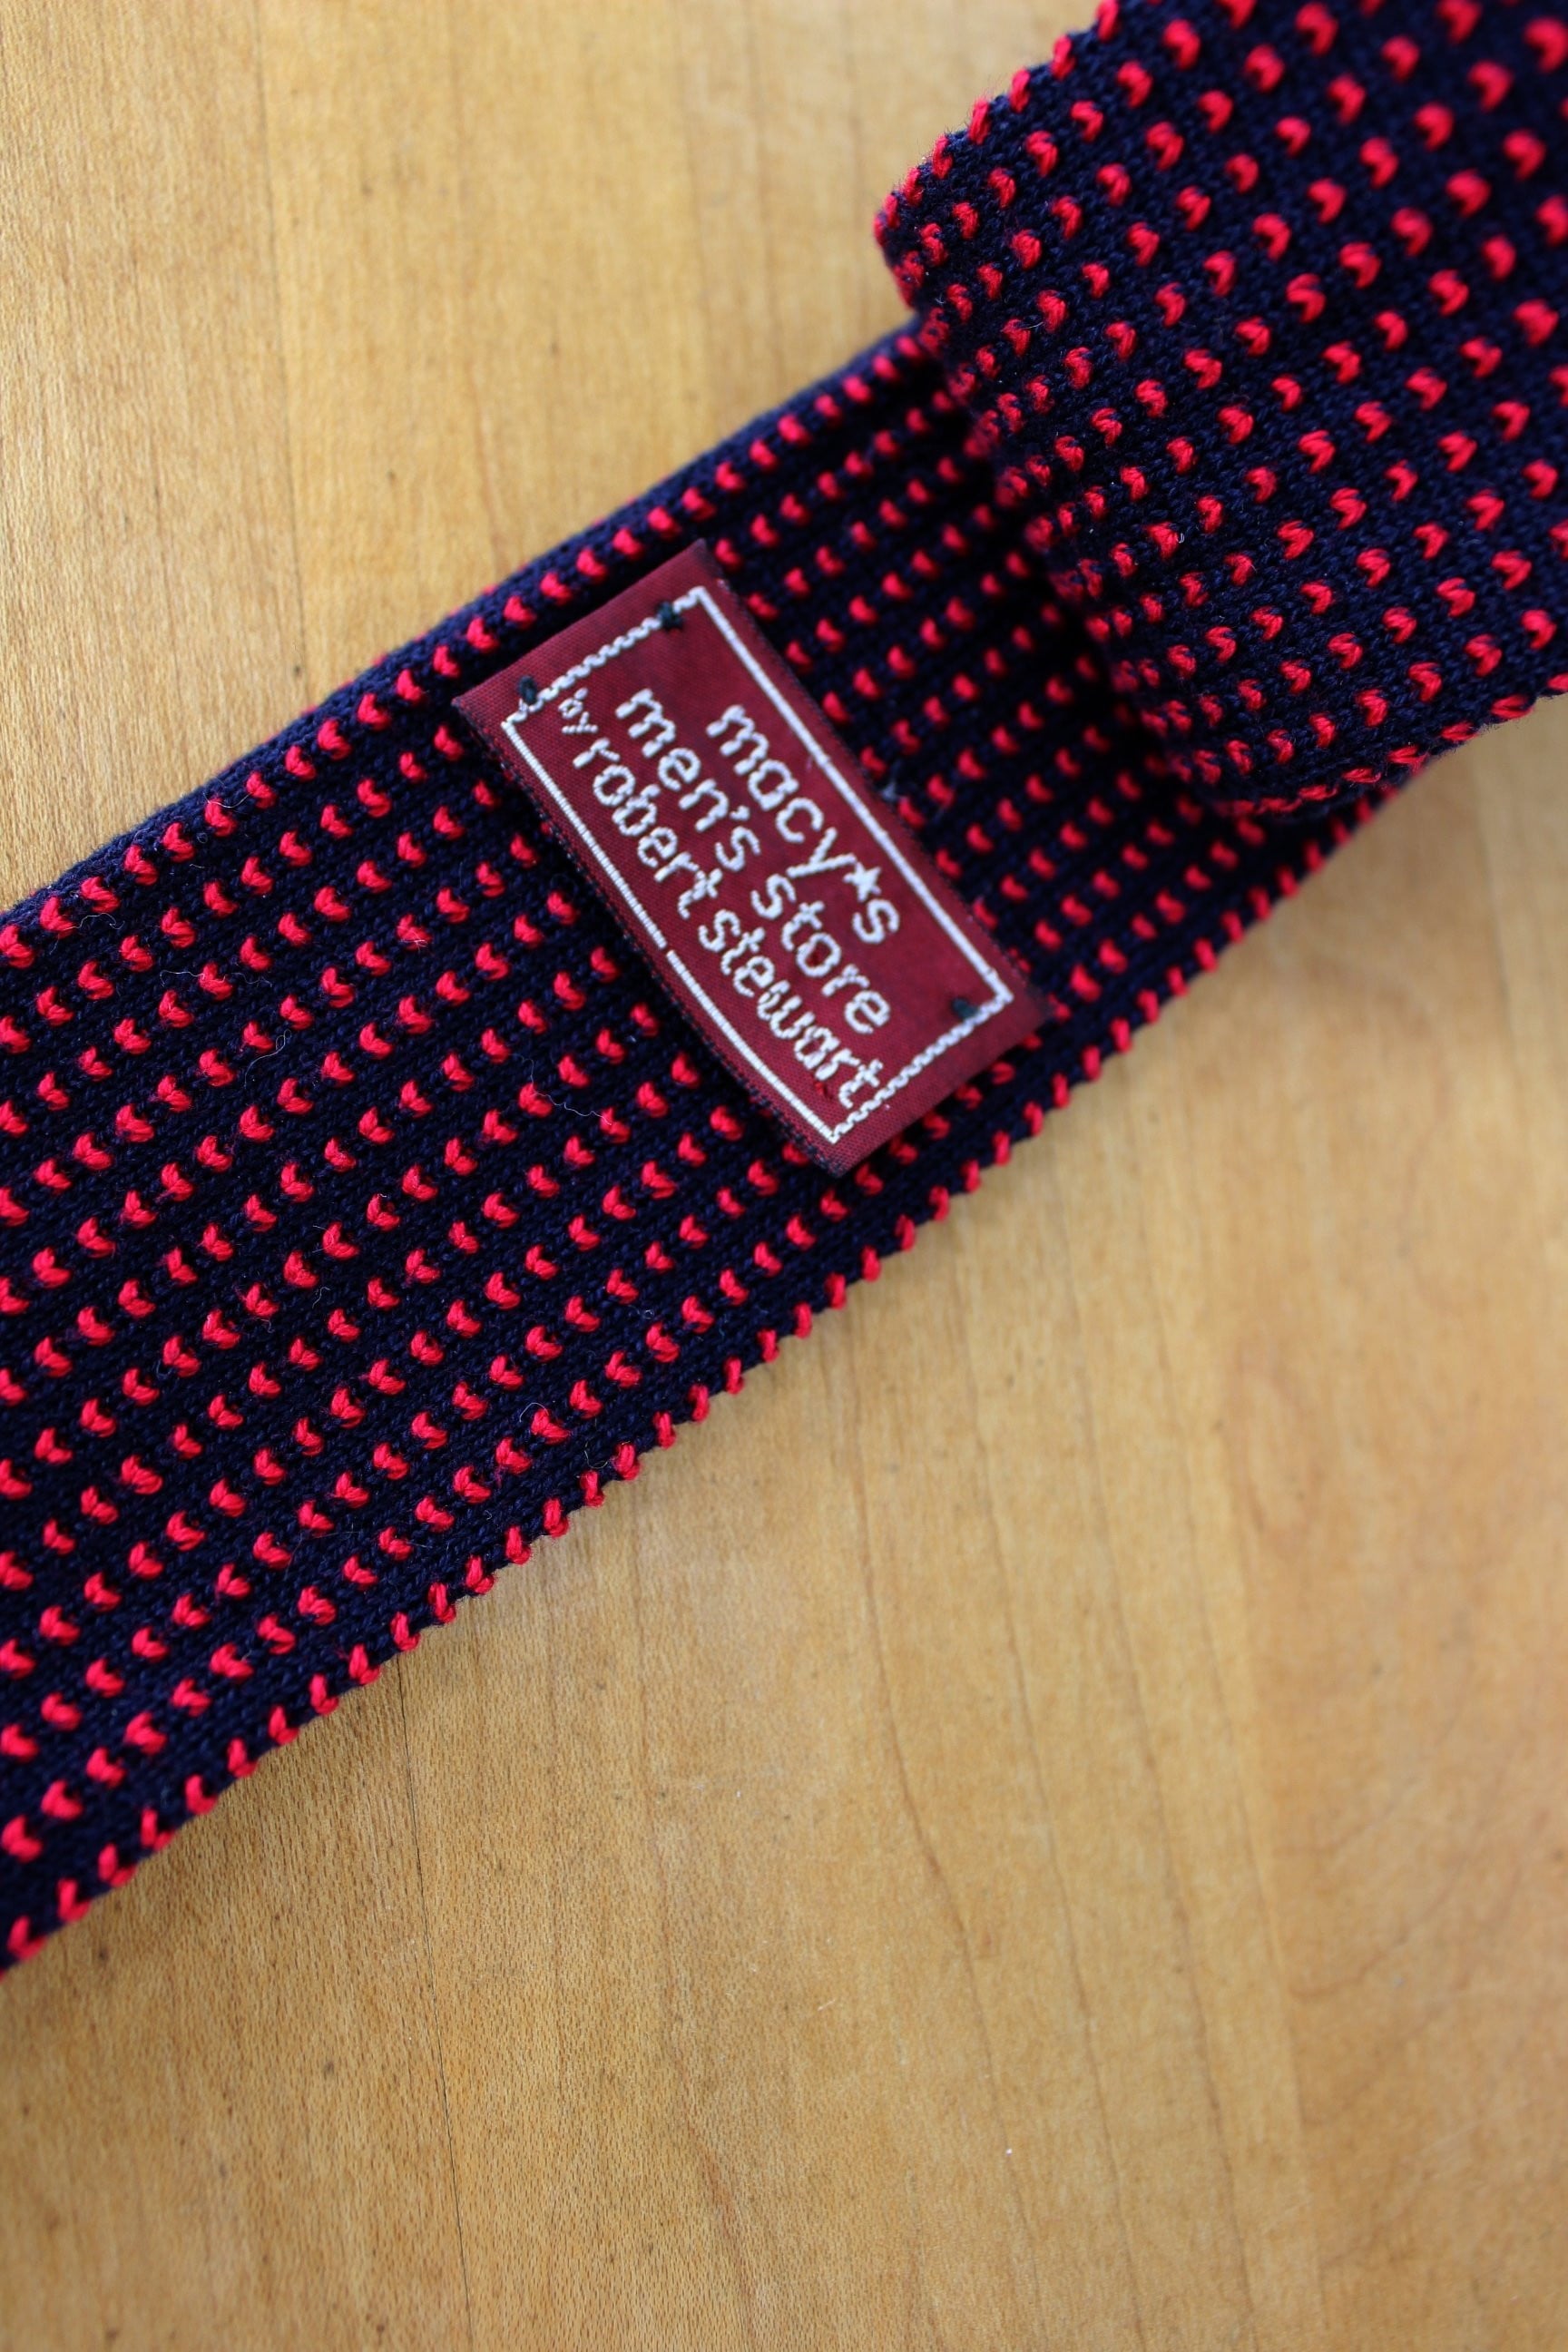 Macy' Men's Store Necktie - Vintage Robert Stewart - Lisle Cotton Knit Red Navy Blue stunning skinny style